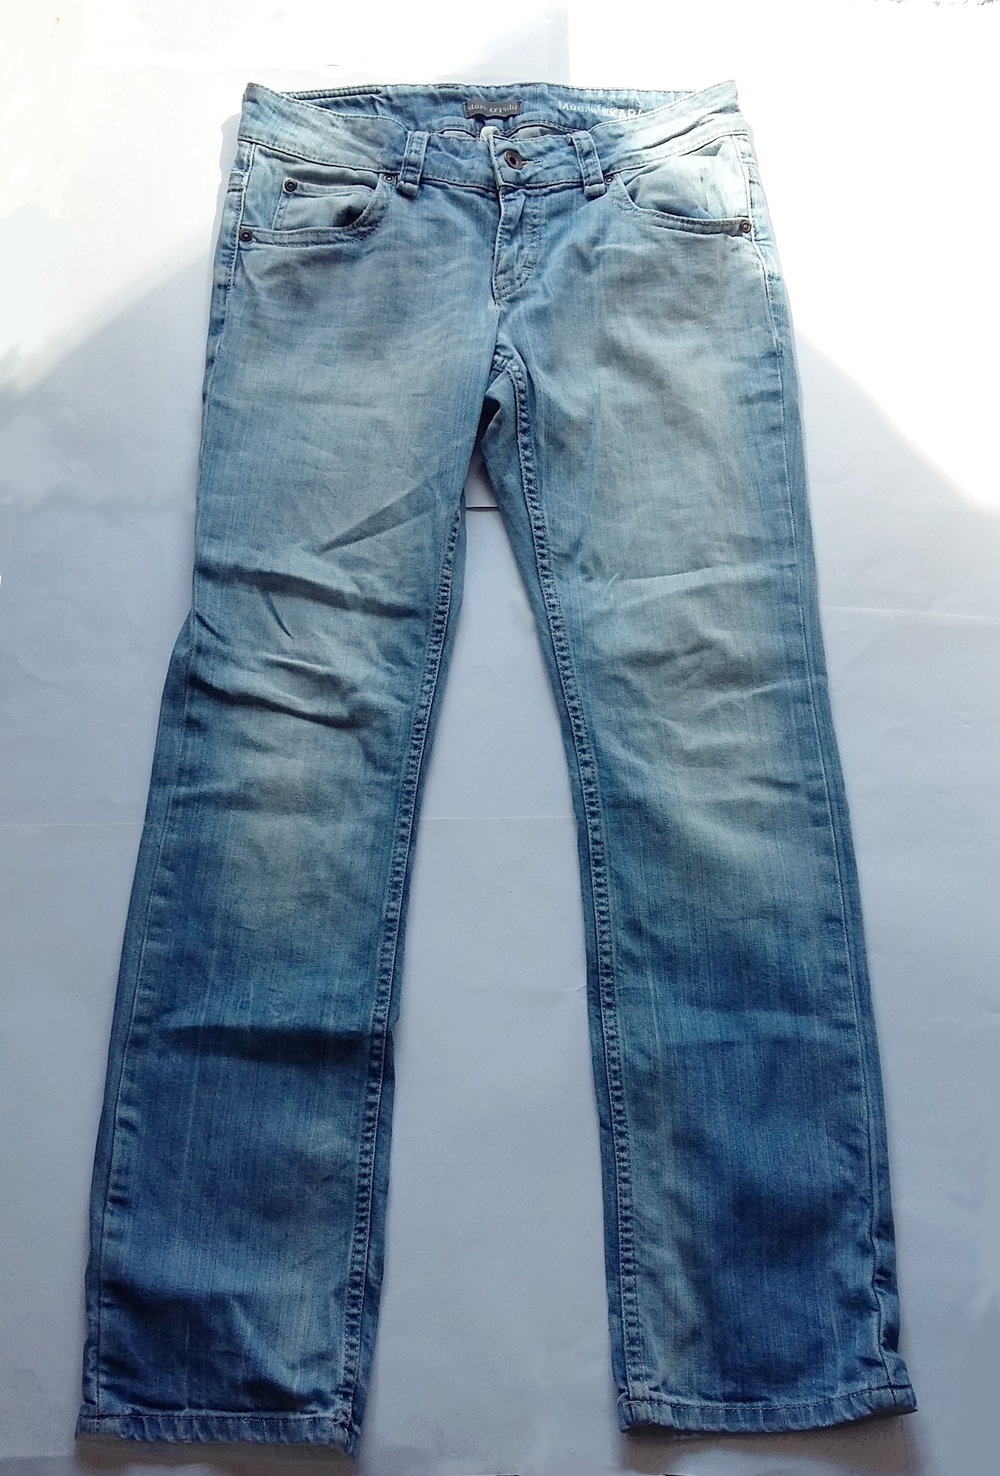 Jeans Marc O'Polo 30/32 (M / 38/40) blau Regular Straight, OVP 100€!